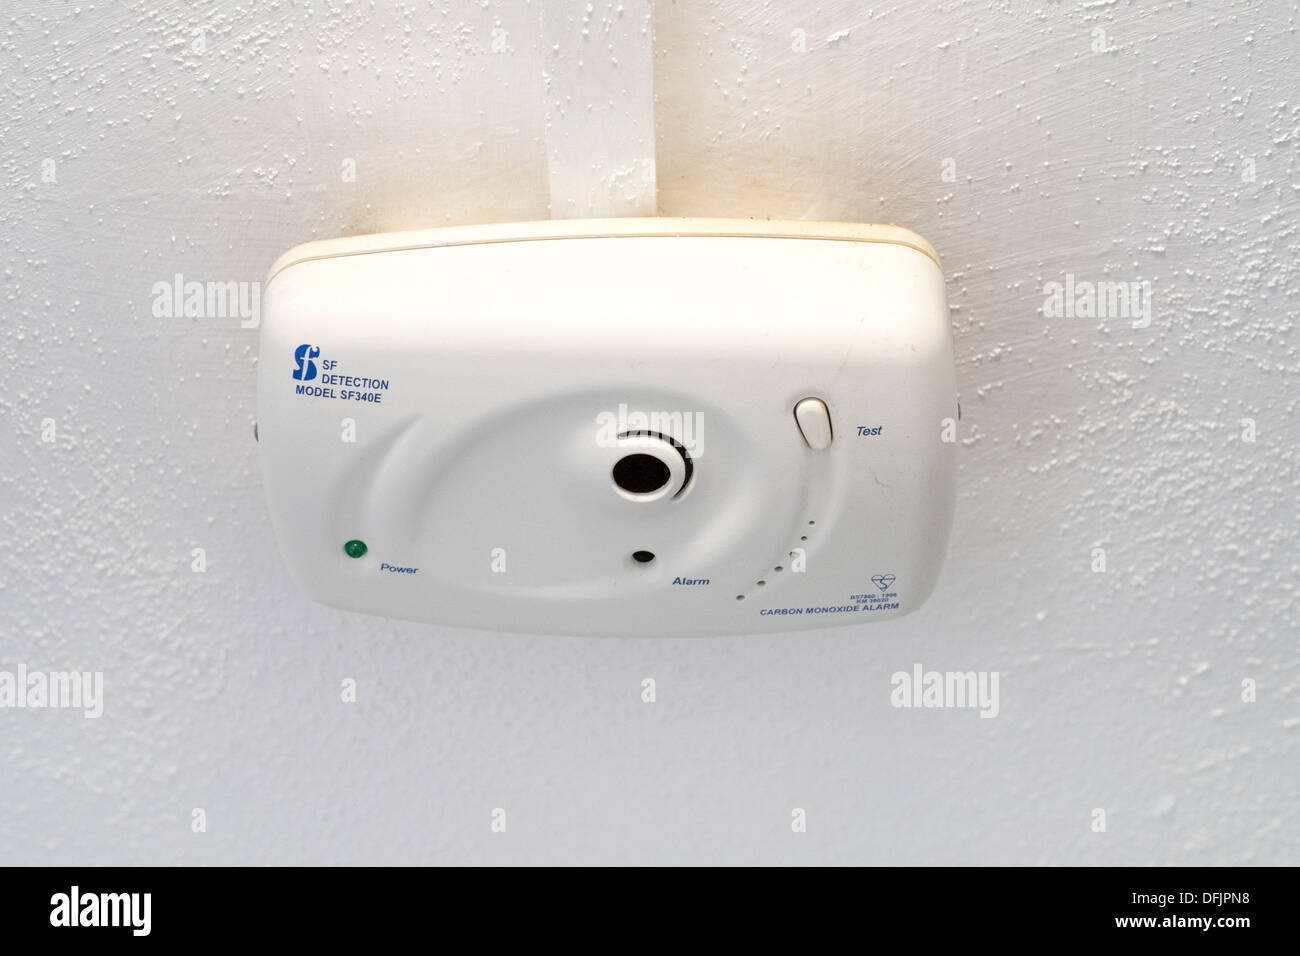 Domestic carbon monoxide detector alarm UK Stock Photo